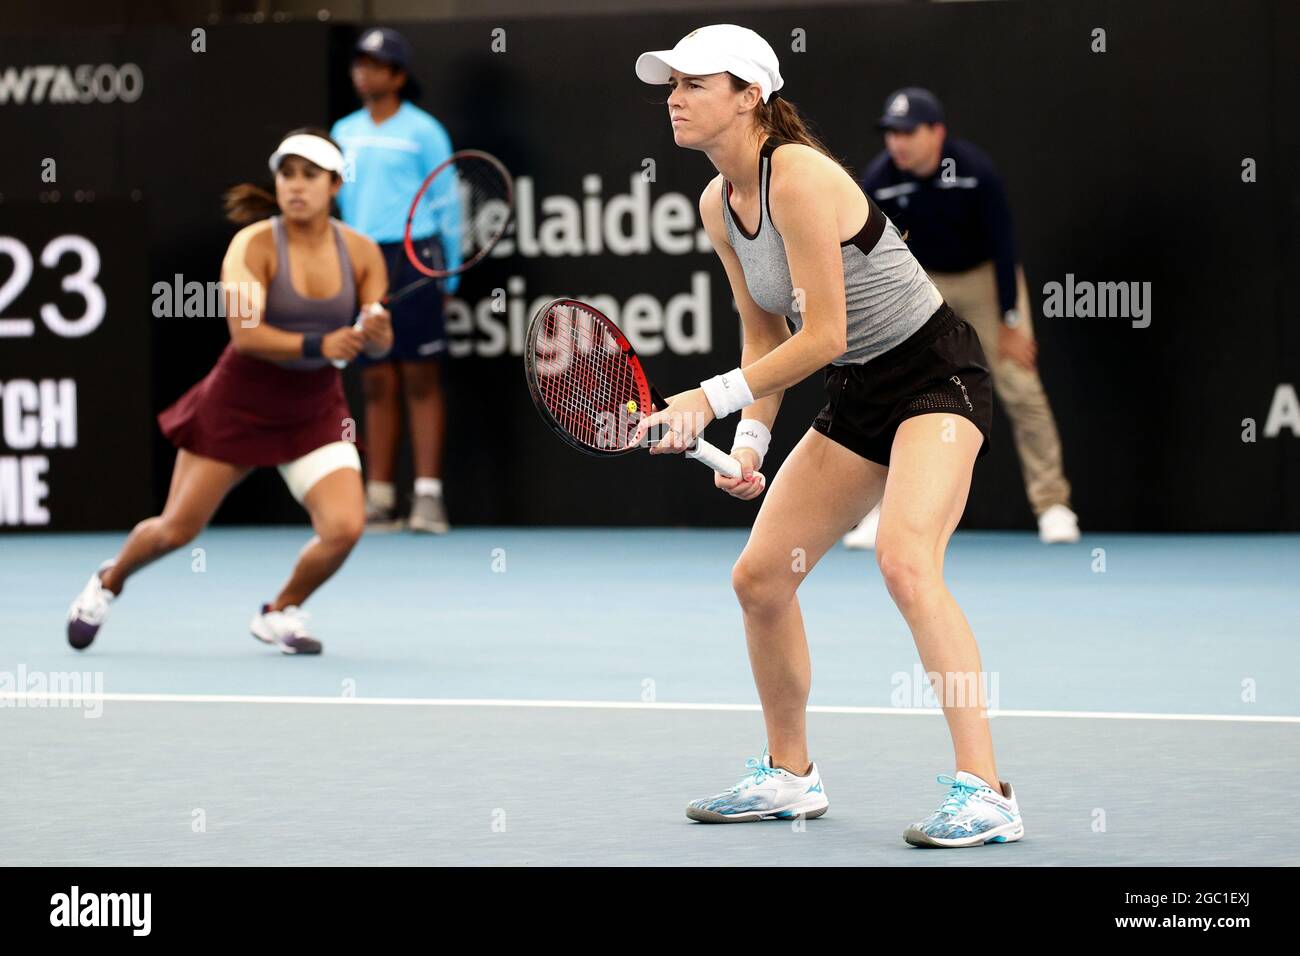 ADELAIDA, AUSTRALIA - FEBRERO 26: Kaitlyn Christian y Sabrina Santamaria de  Estados Unidos juegan un tiro contra Alexa Guarachi de Chile y Desirae  Krawczyk de Estados Unidos durante su partido de dobles